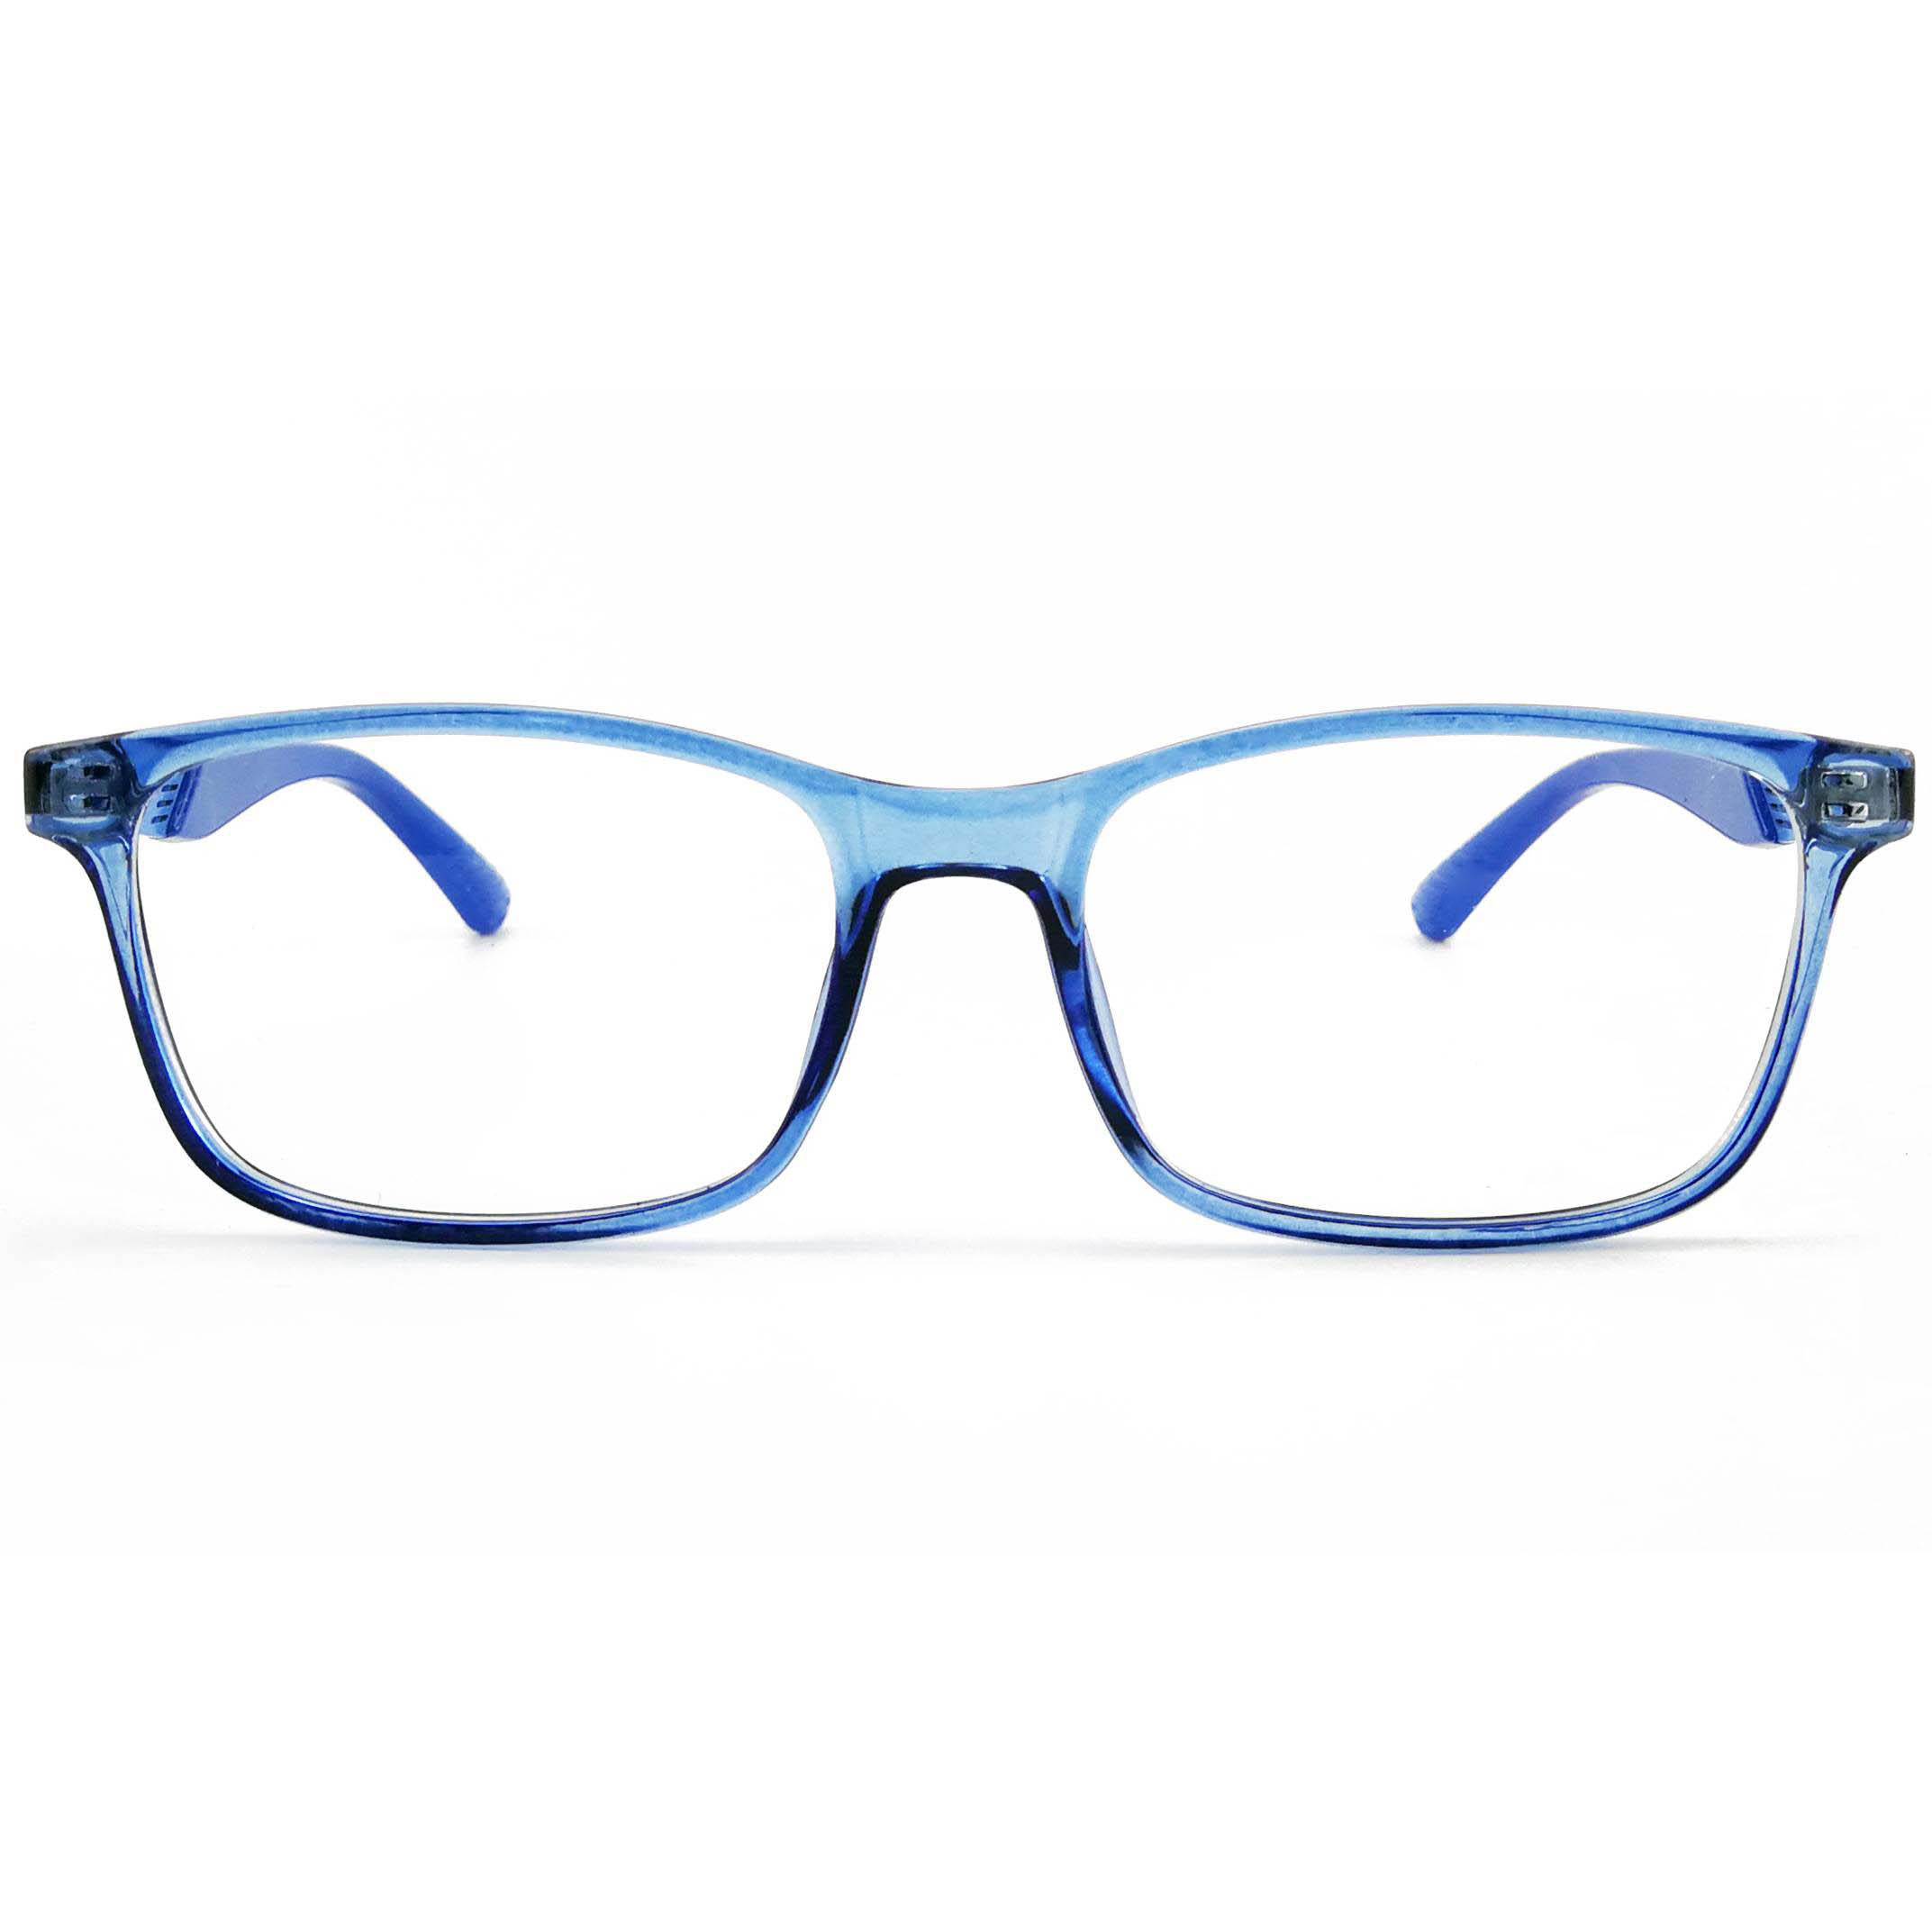 Eugenia optical glasses wholesale modern design  For optical frame glasses-1